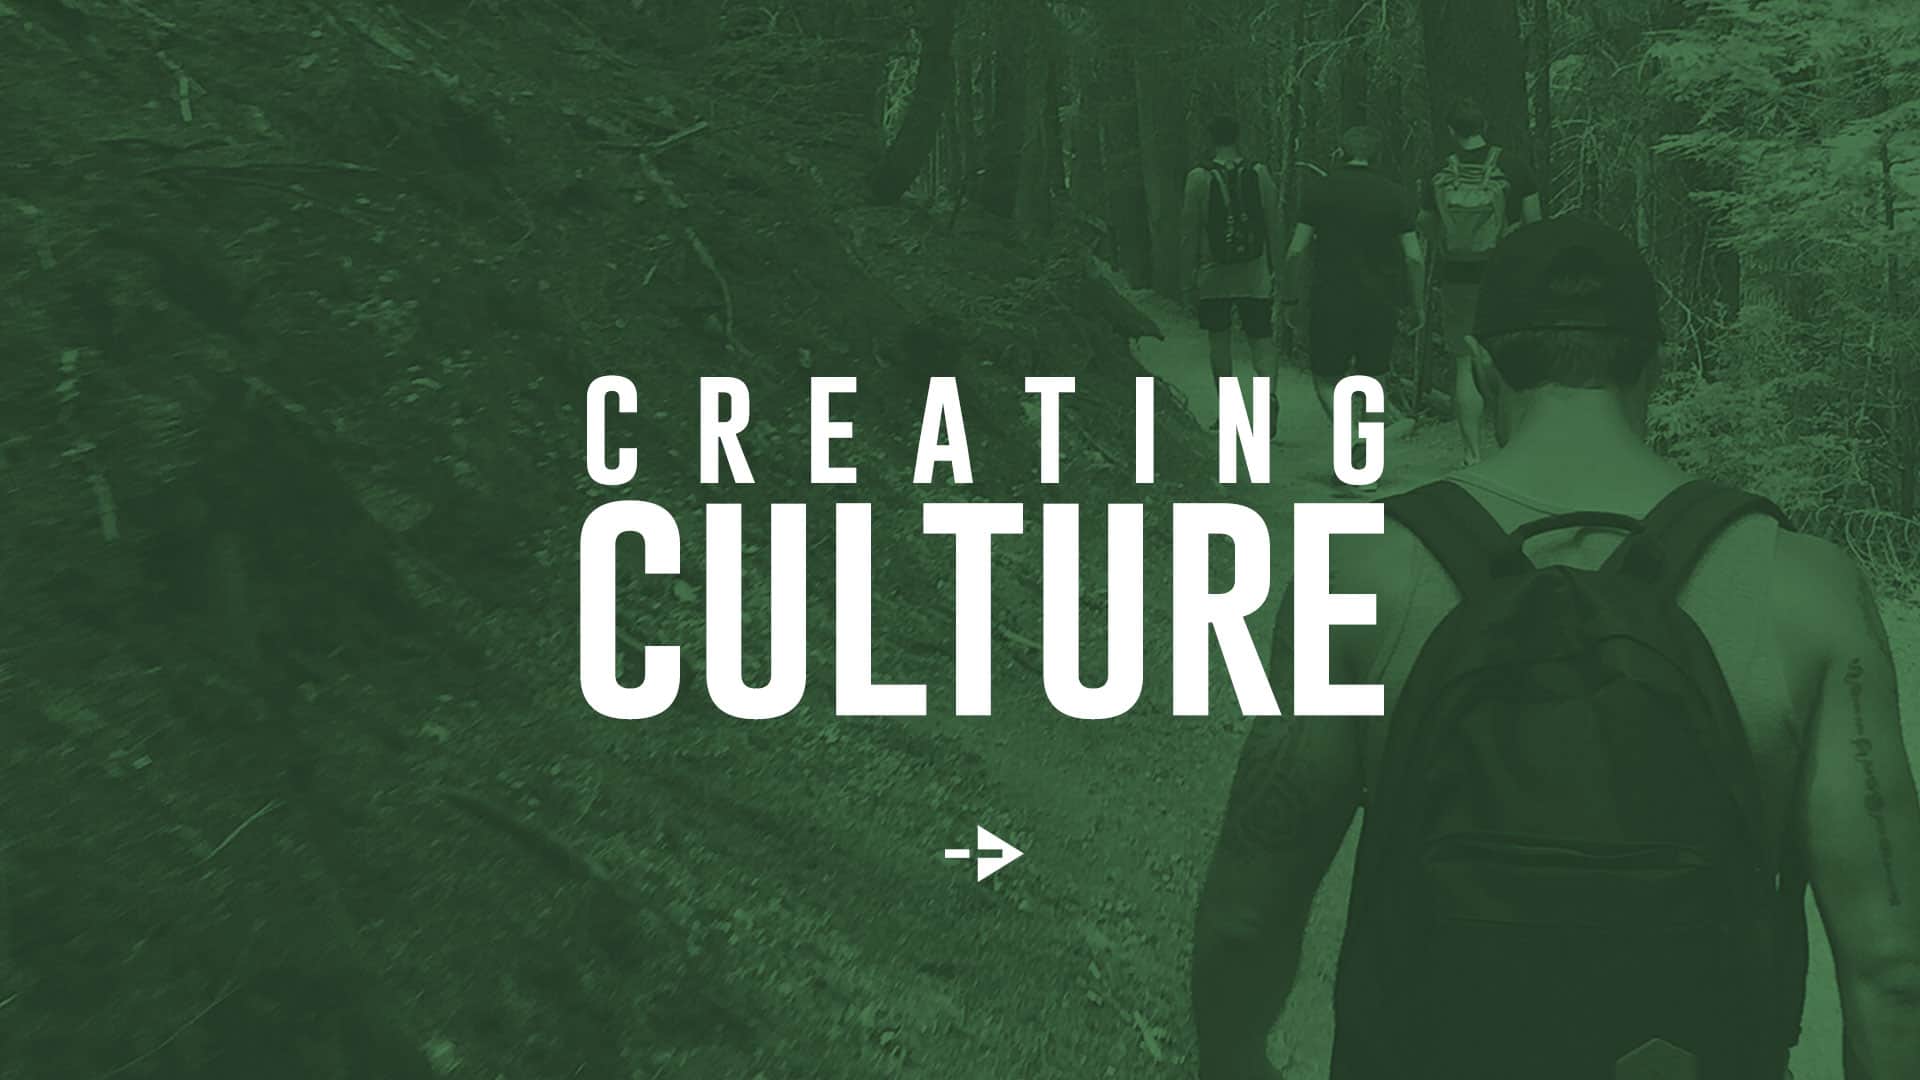 Creating Culture